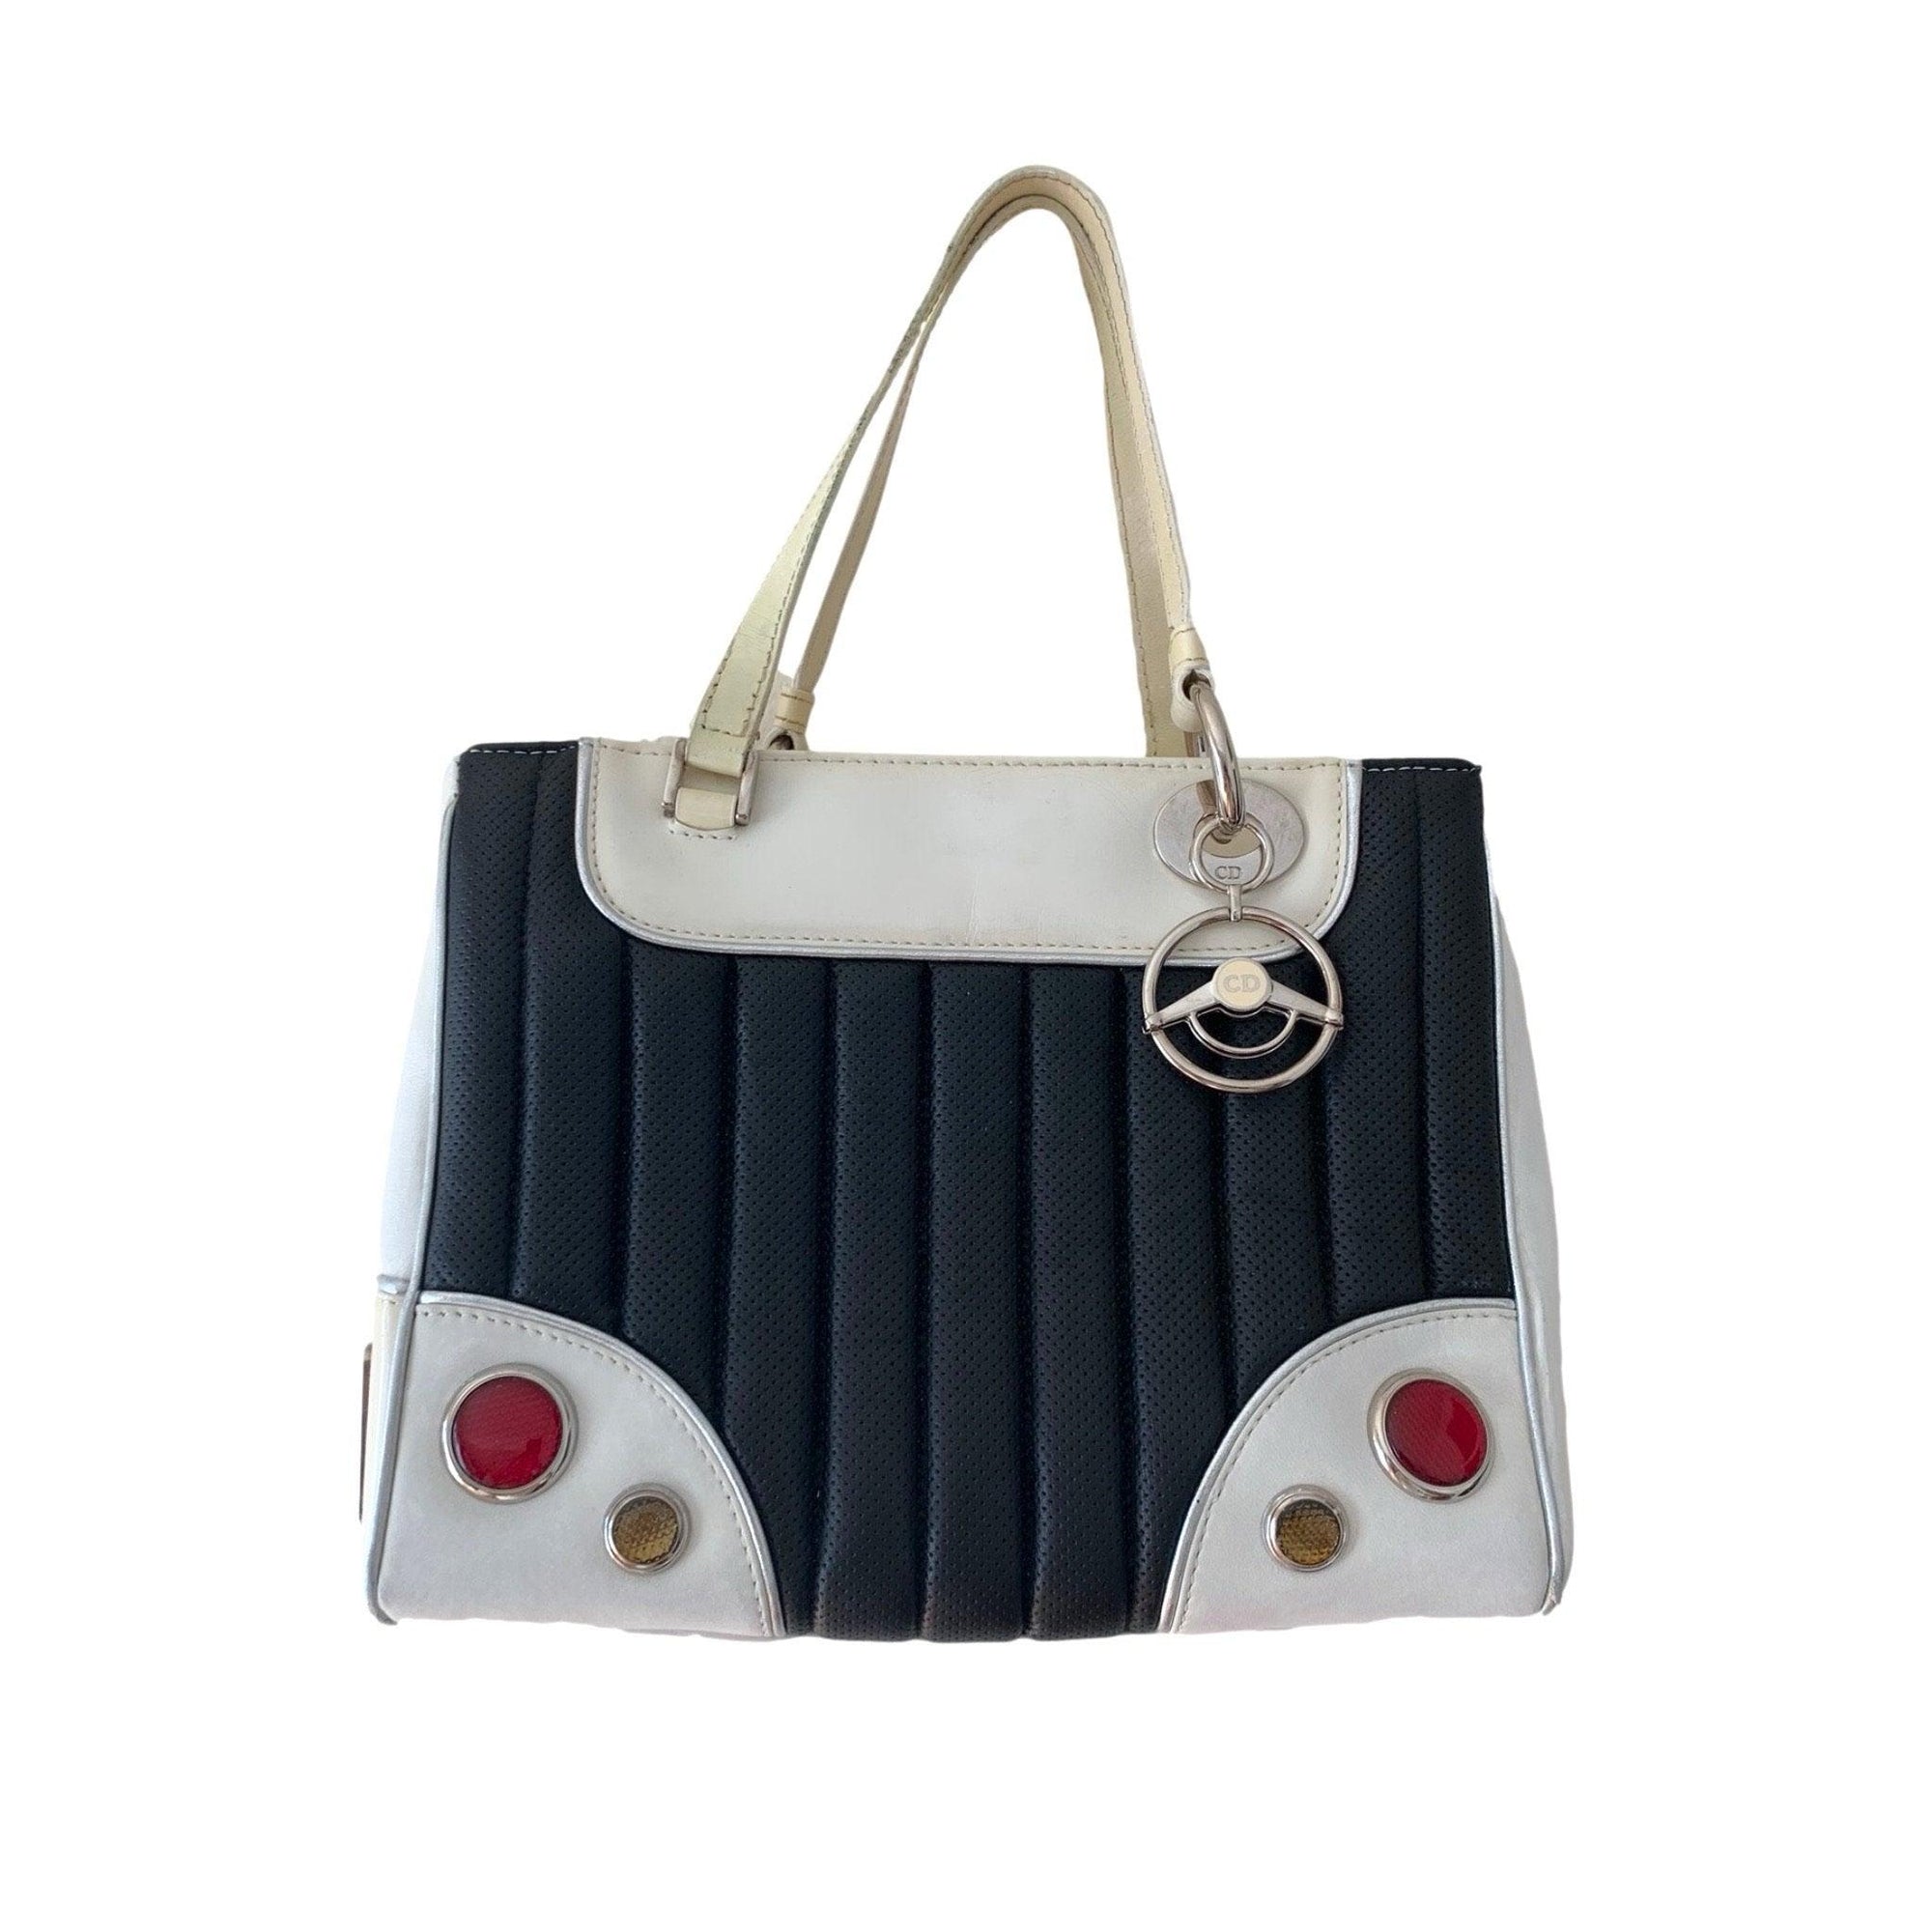 Dior Black Cadillac Shoulder Bag - Handbags